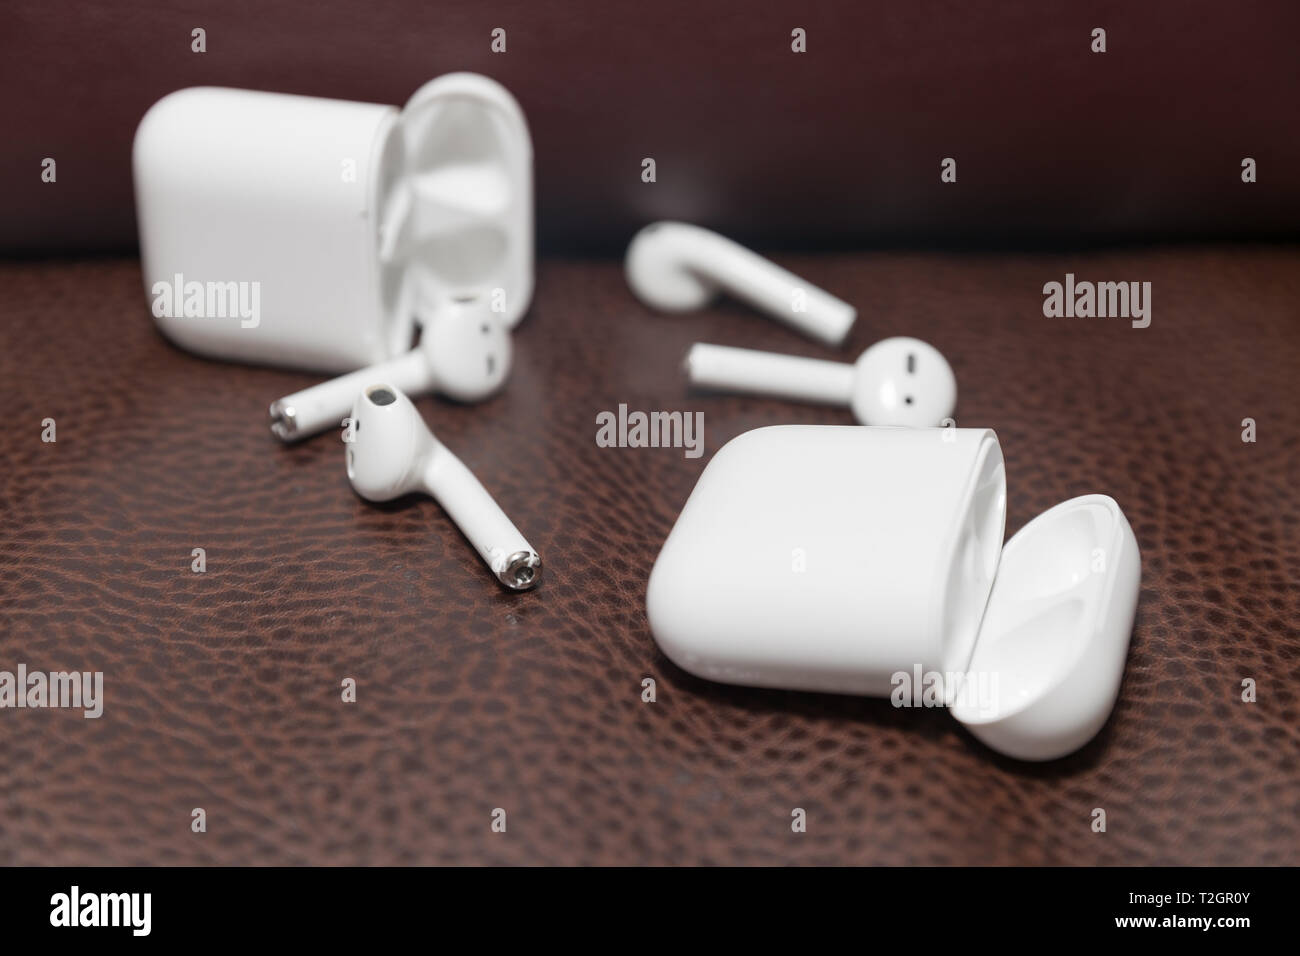 Lawrence County New Jersey, 11. März 2019: Apple AirPods drahtlose  Bluetooth® Kopfhörer und Ladegerät für Apple iPhone. Neue Apple Earpods  Airpods Stockfotografie - Alamy